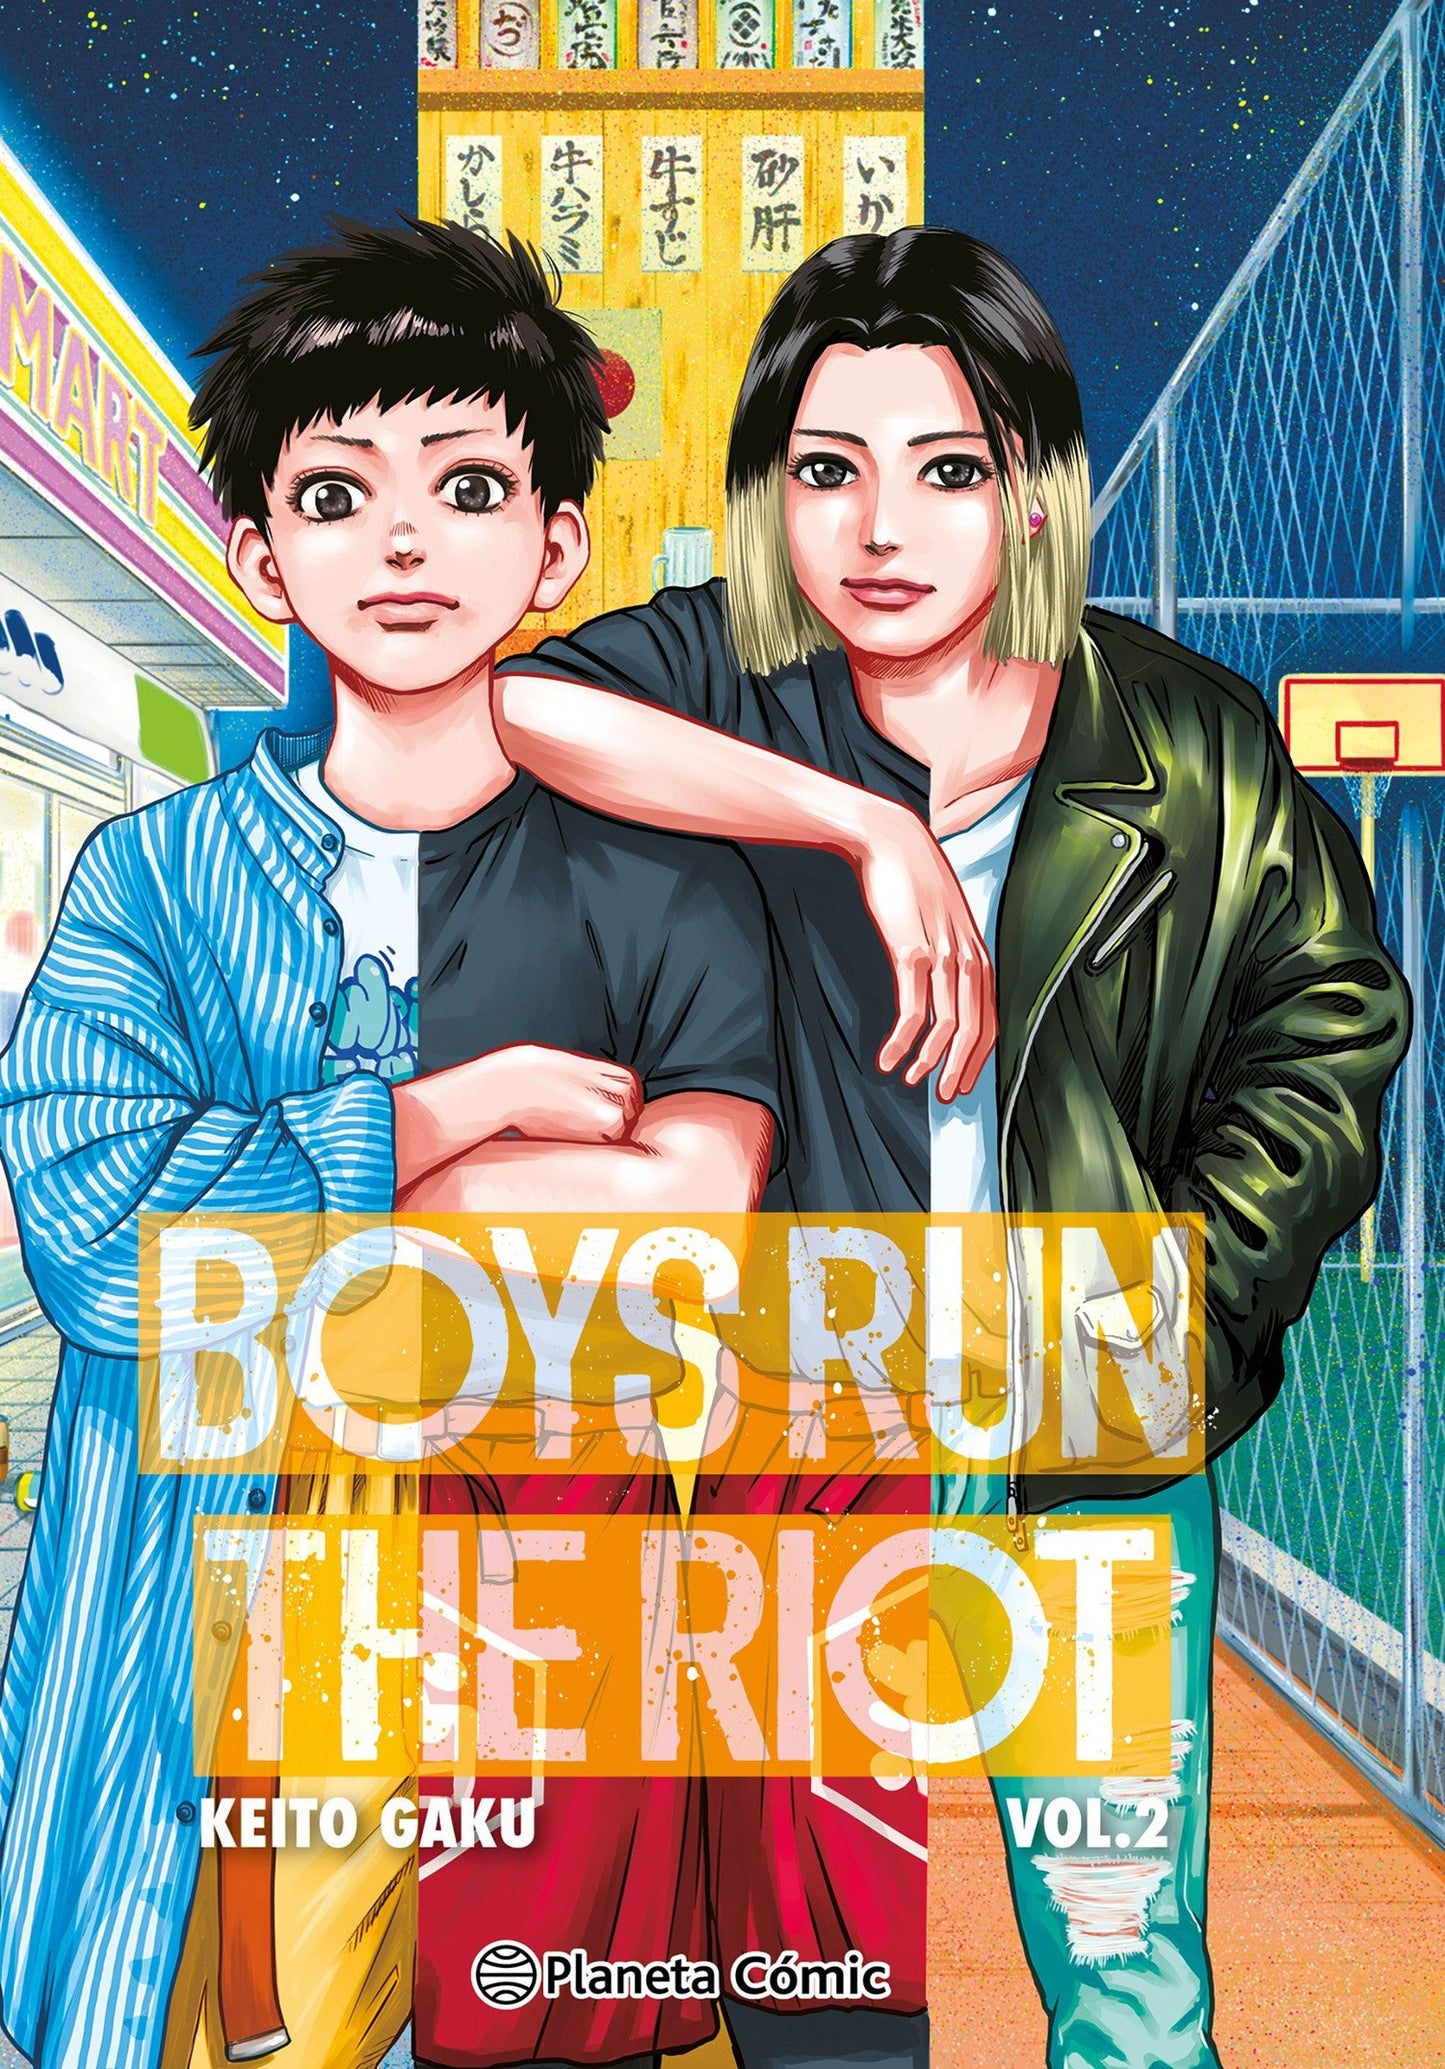 Boys Run the Riot Vol.2 Planeta ENcuadrocomics